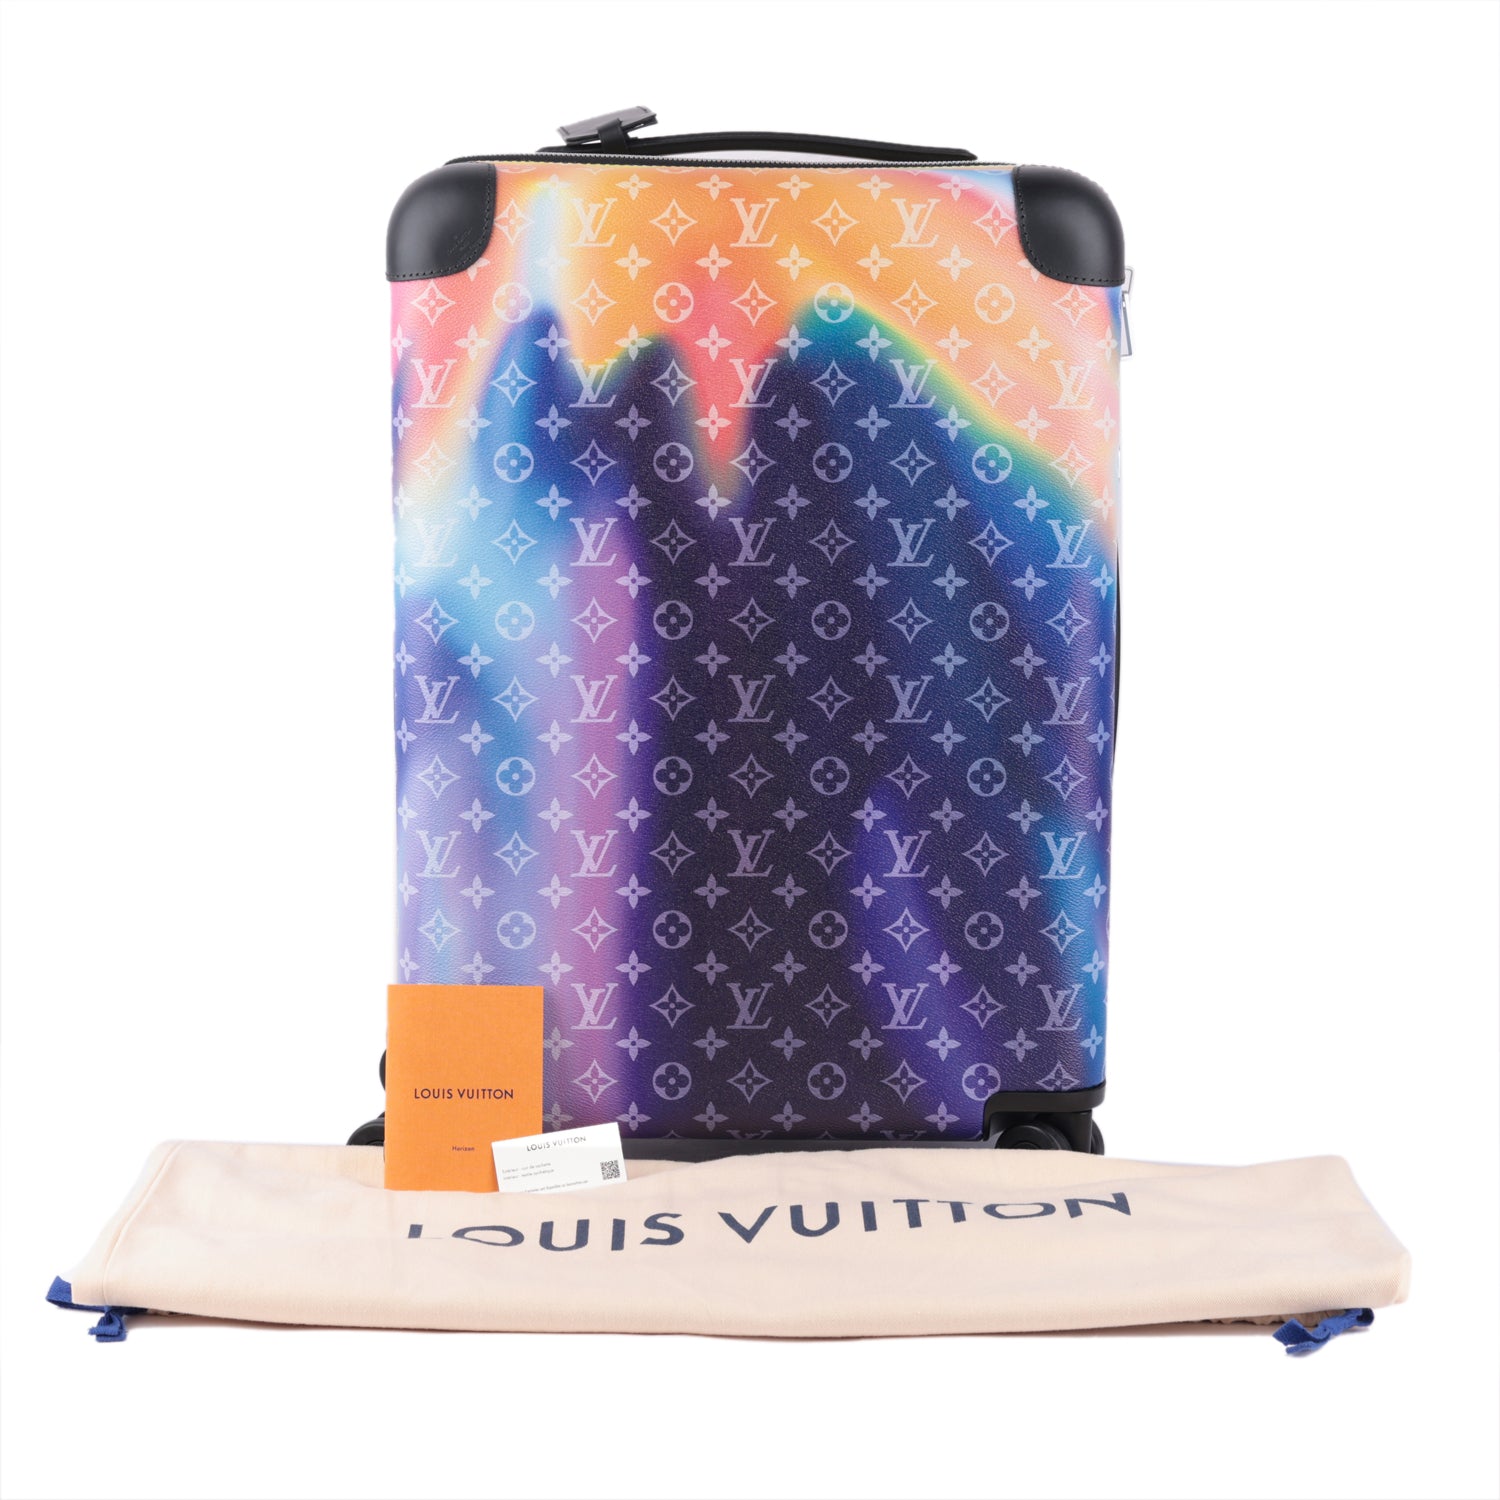 Louis Vuitton Horizon 55 leather travel bag